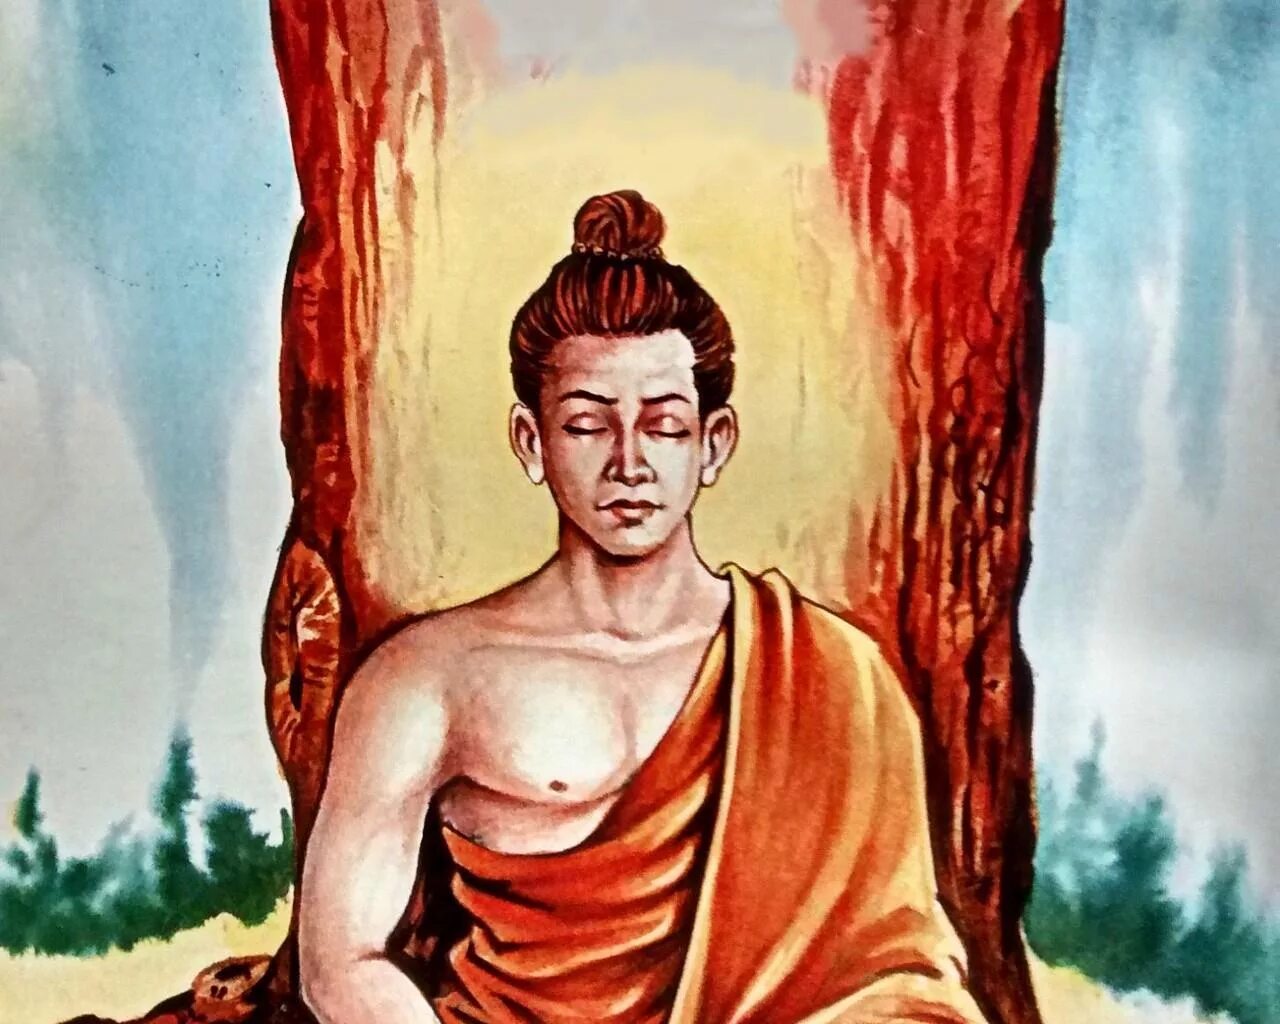 У царя племени родился сын гаутама. Сиддхартха Гаутама. Сиддхартха Гаутама Шакьямуни. Принц Гаутама Сиддхартха Шакьямуни. Будда Гаутама.